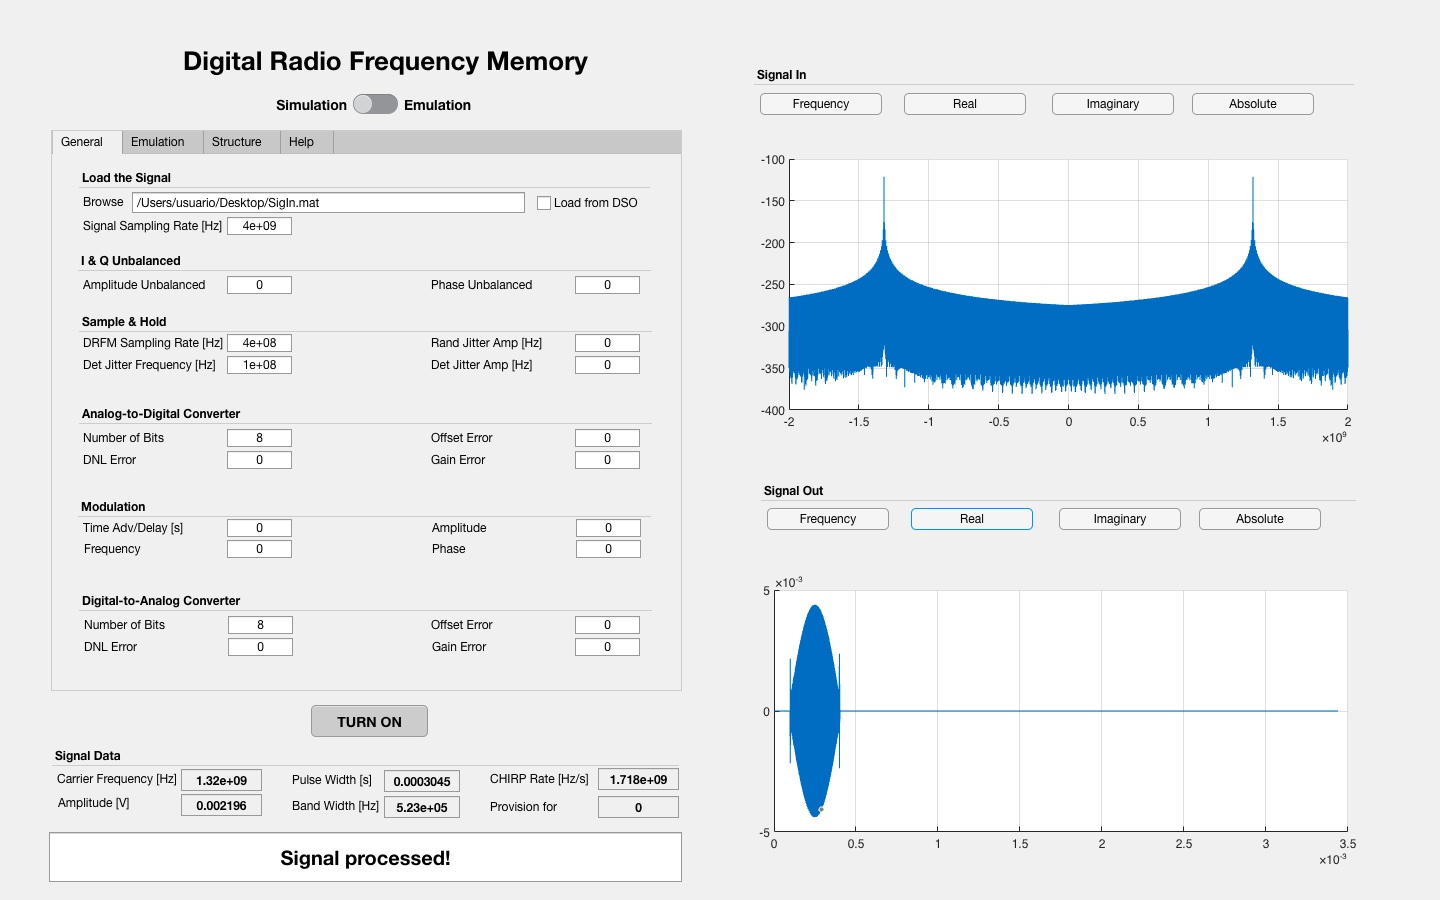 Emulation-based Validation Procedure for Digital RF Memory Simulator